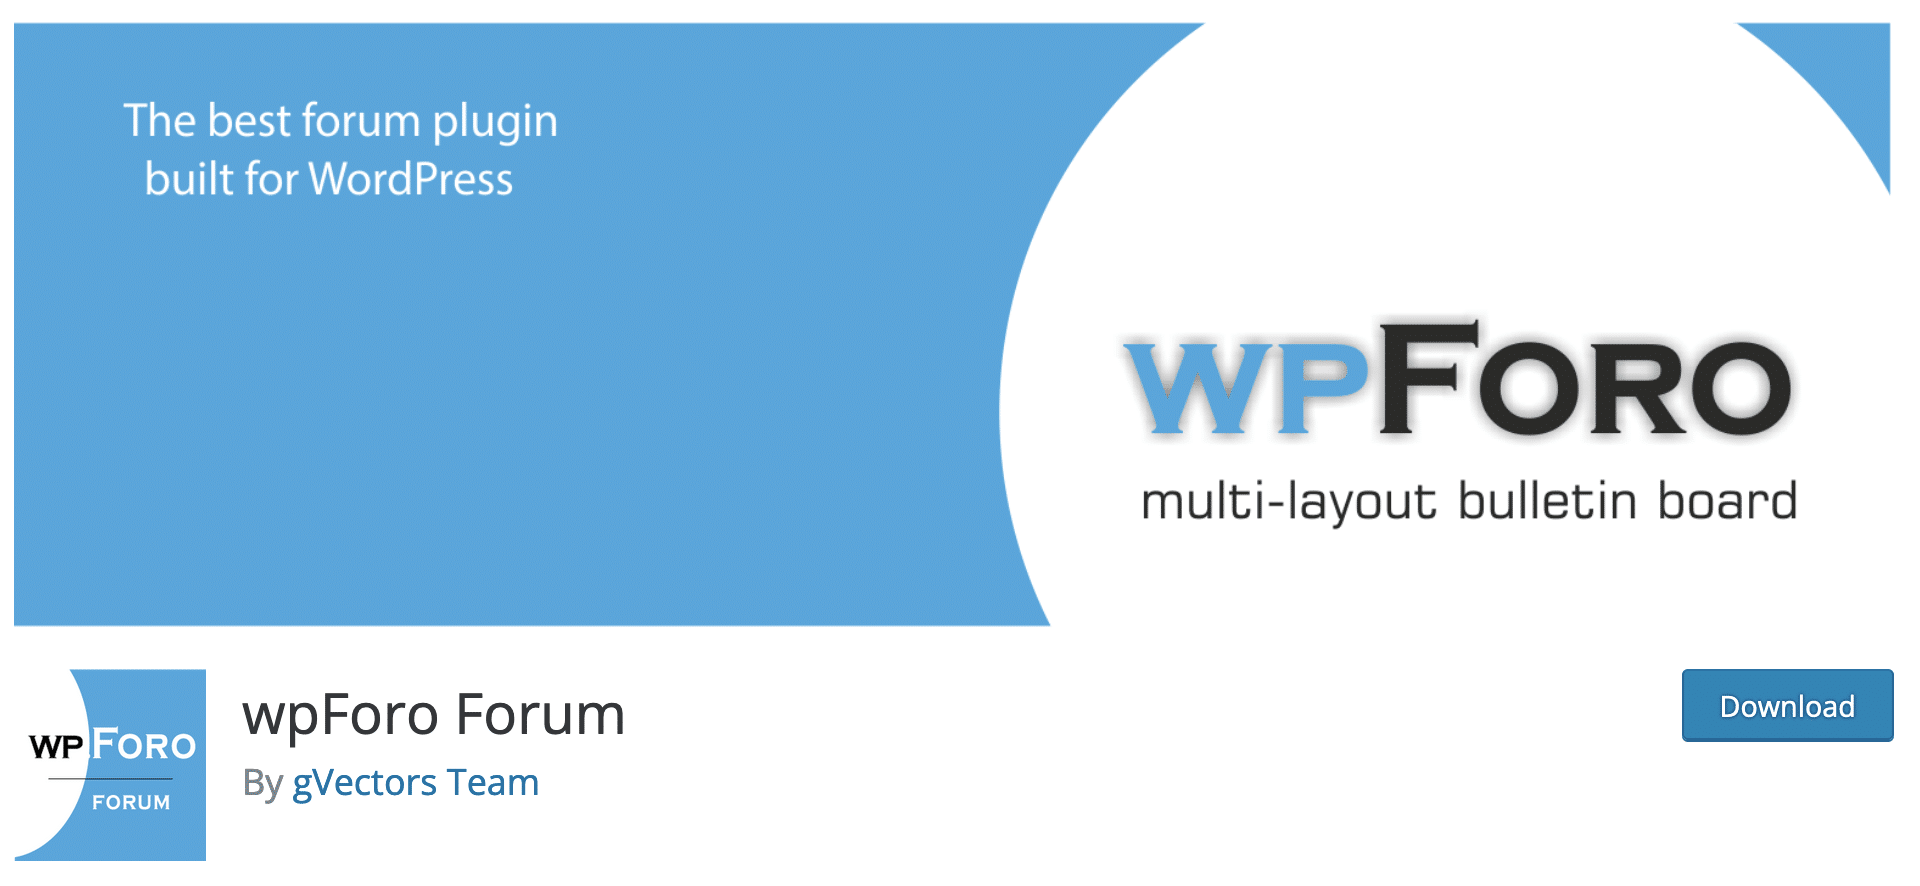 wpForo Forum plugin download page.